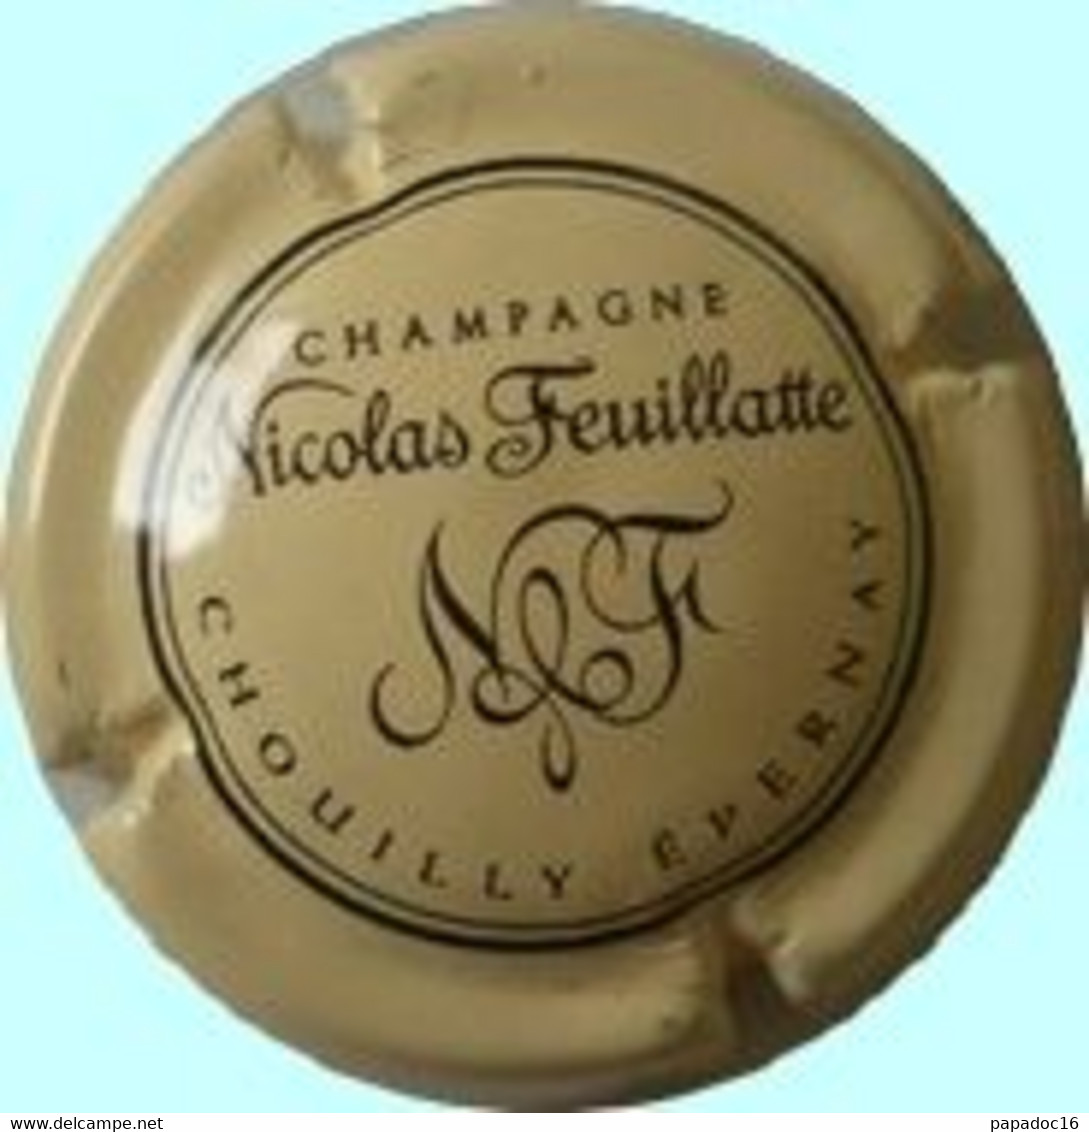 Plaque / Capsule De Muselet - Champagne Nicolas Feuillatte - Chouilly - Noir Sur Beige - Feuillate